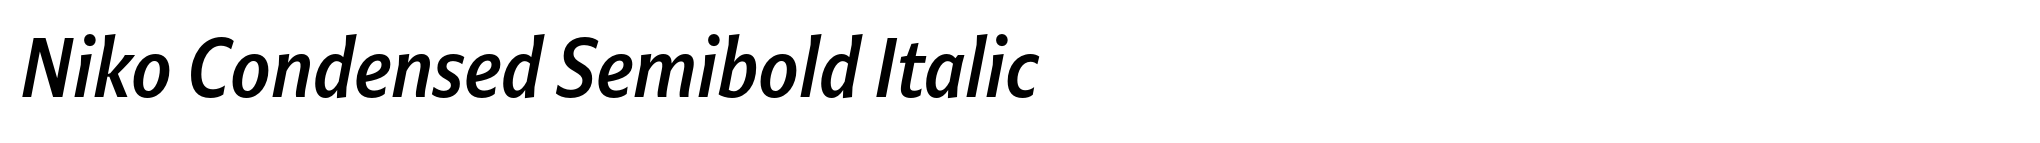 Niko Condensed Semibold Italic image